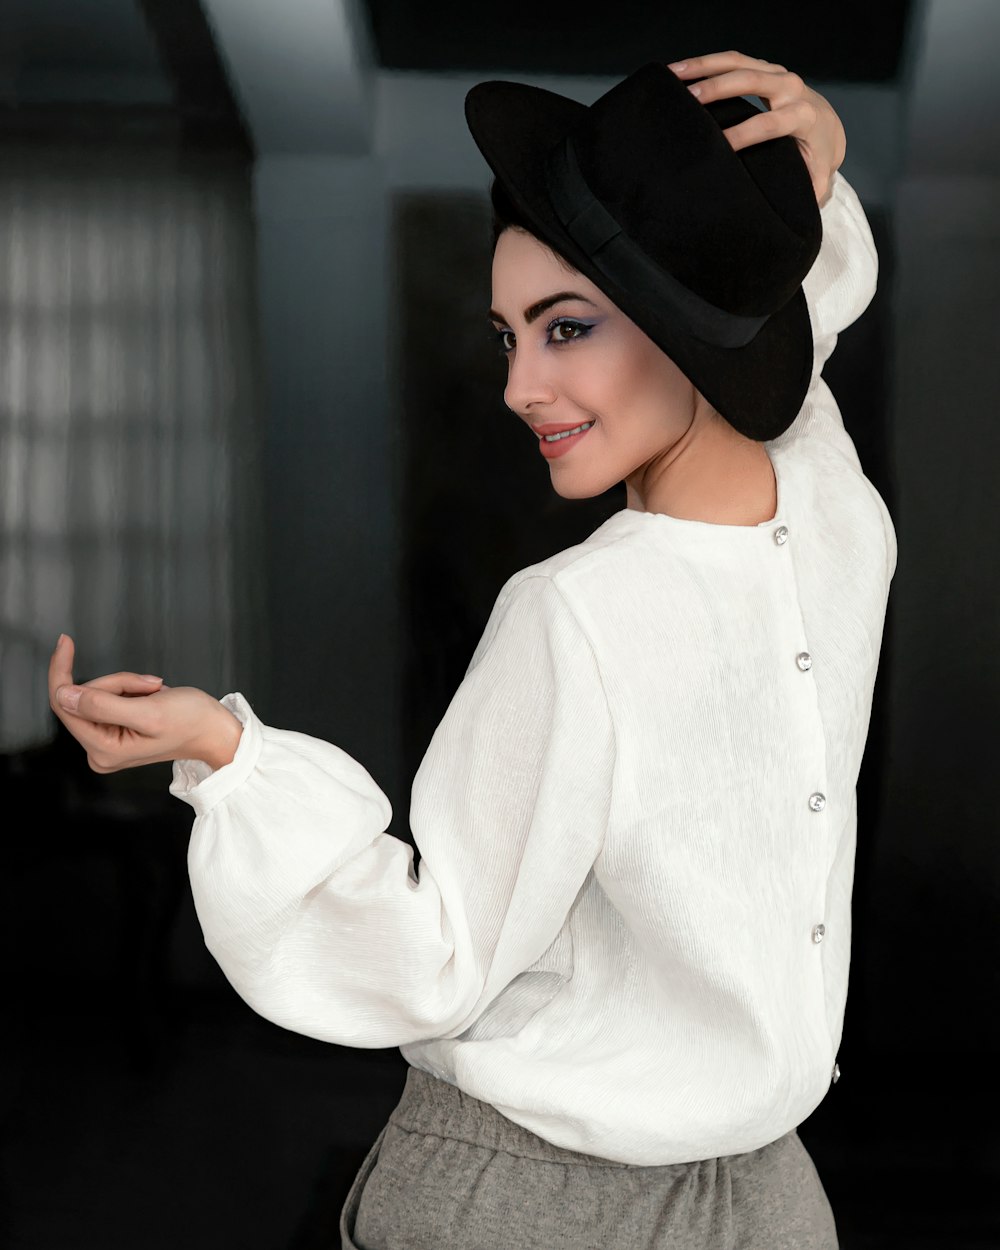 woman in white long sleeve shirt wearing black hat